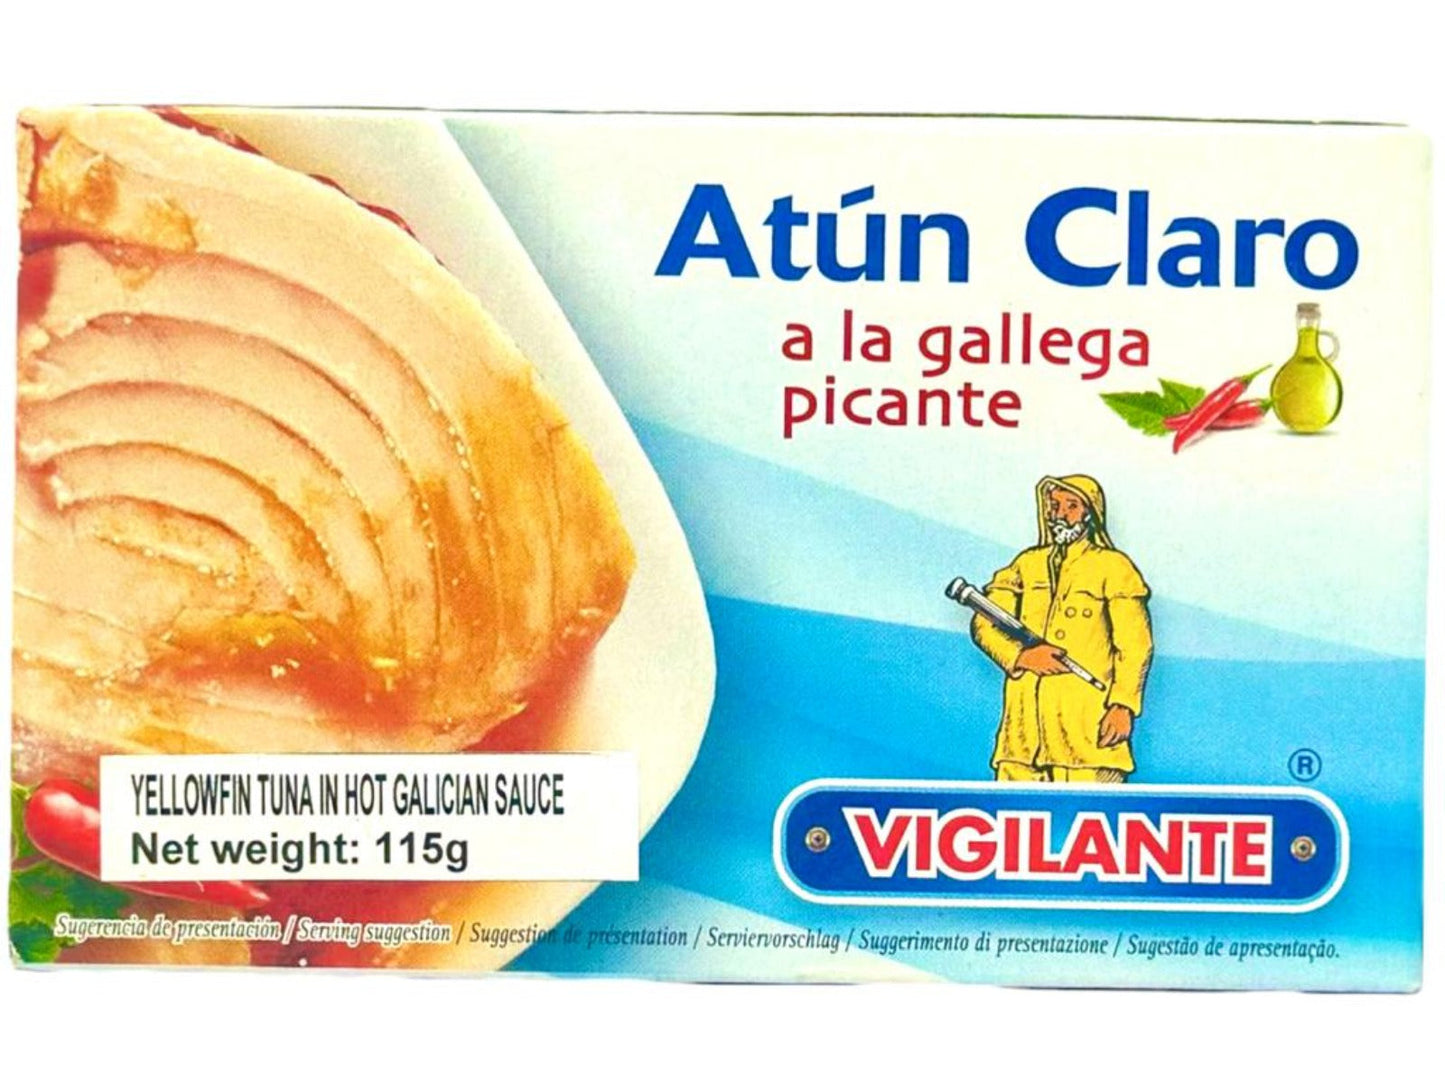 Vigilante Atun Claro a la Gallega Picante Spain - Spanish Yellowfin Tuna in Hot Galican Sauce 115g - 4 Pack Total 460g